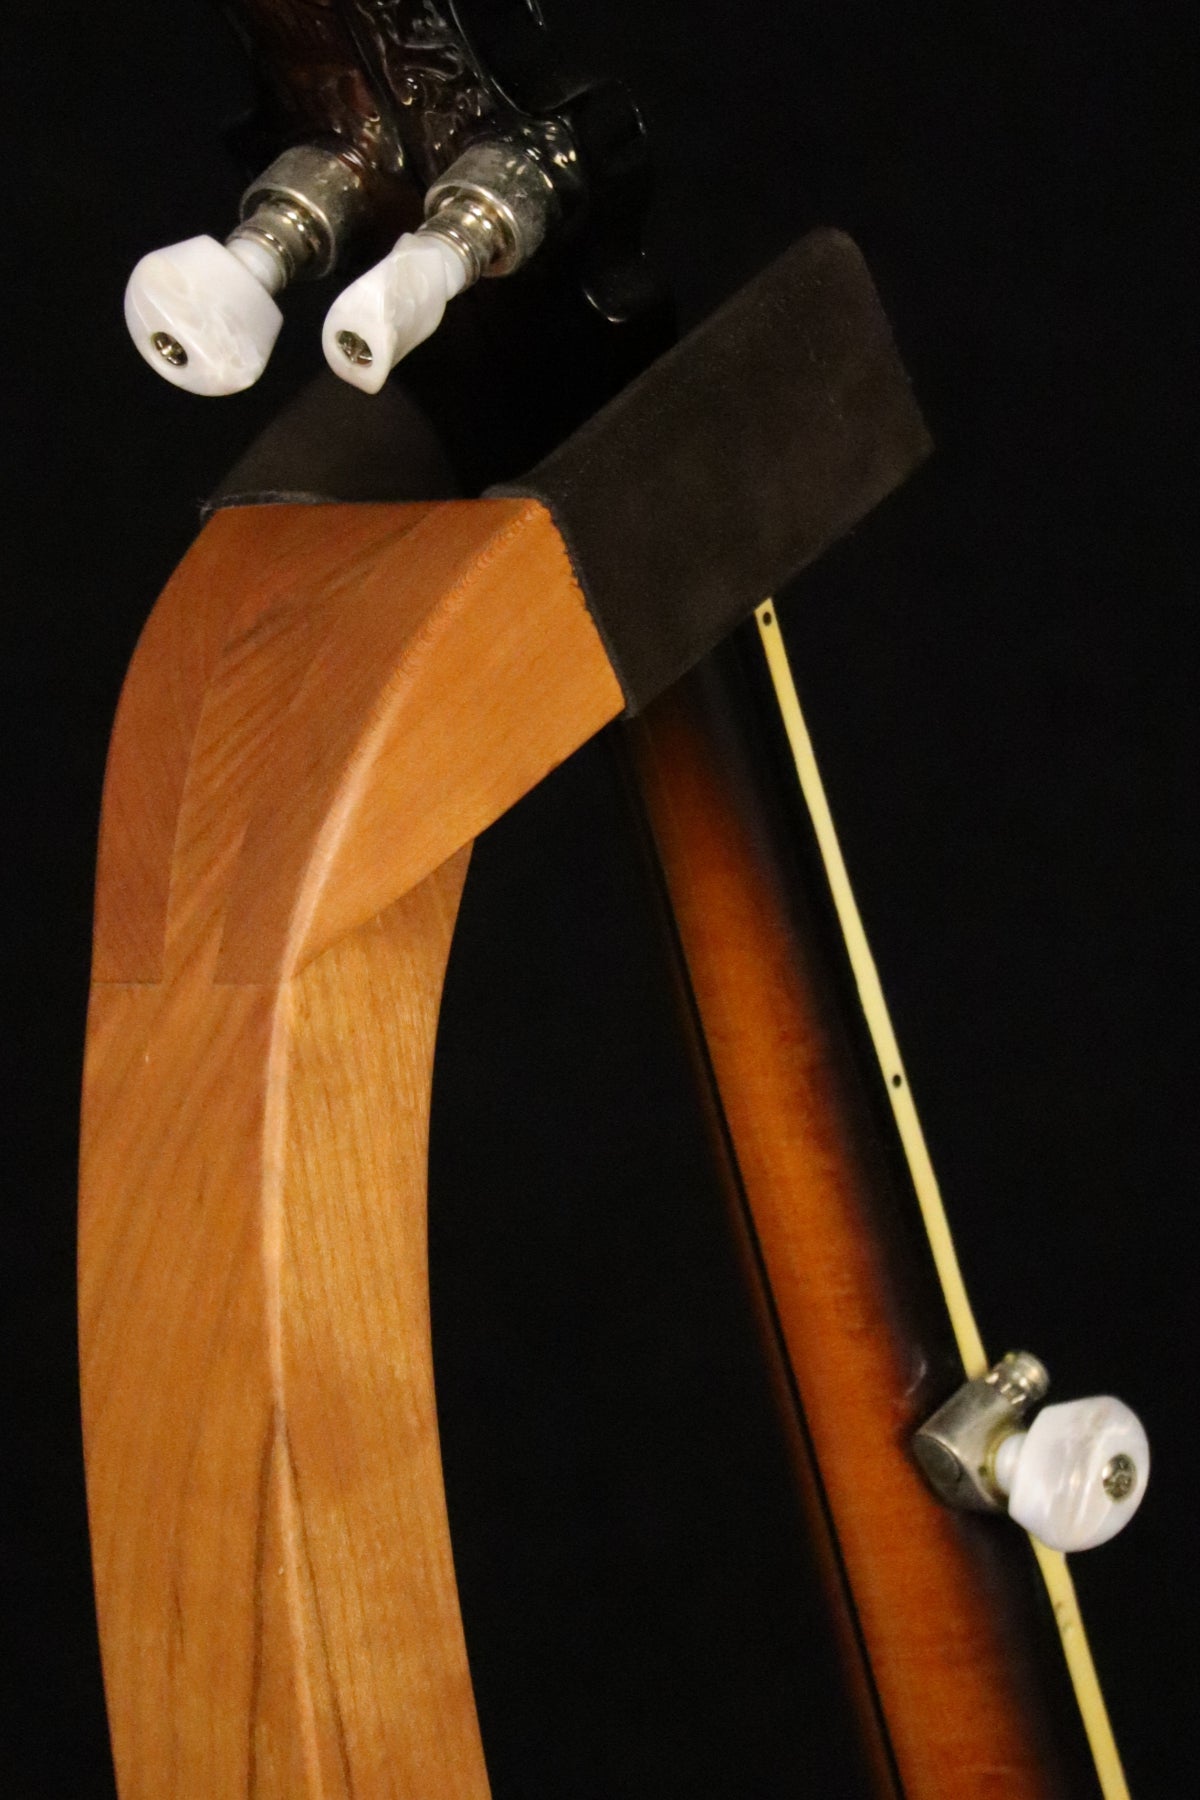 Folding cherry wood banjo floor stand yoke detail image with Alvarez banjo